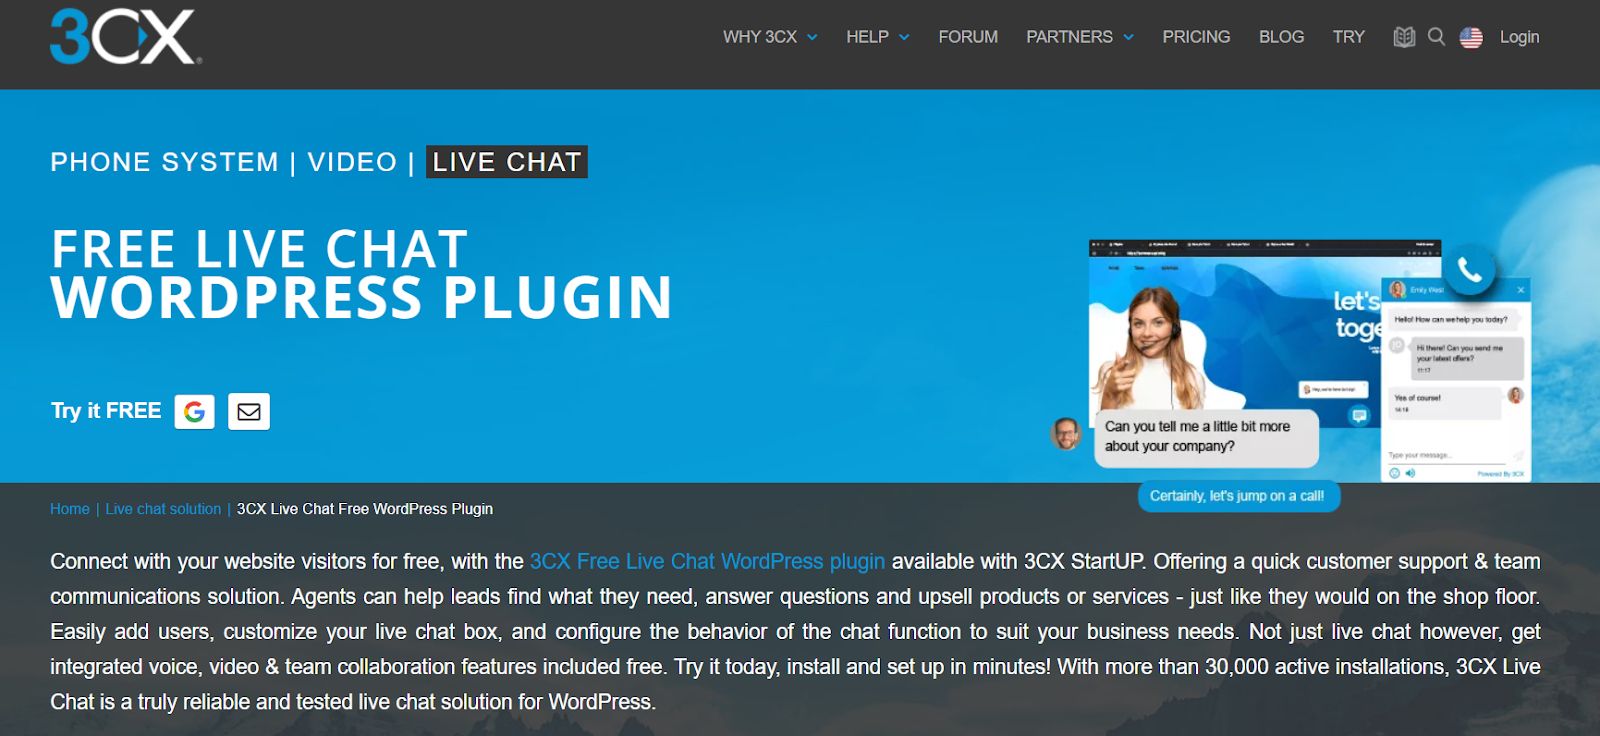 3CX Live Chat Plugin for WordPress